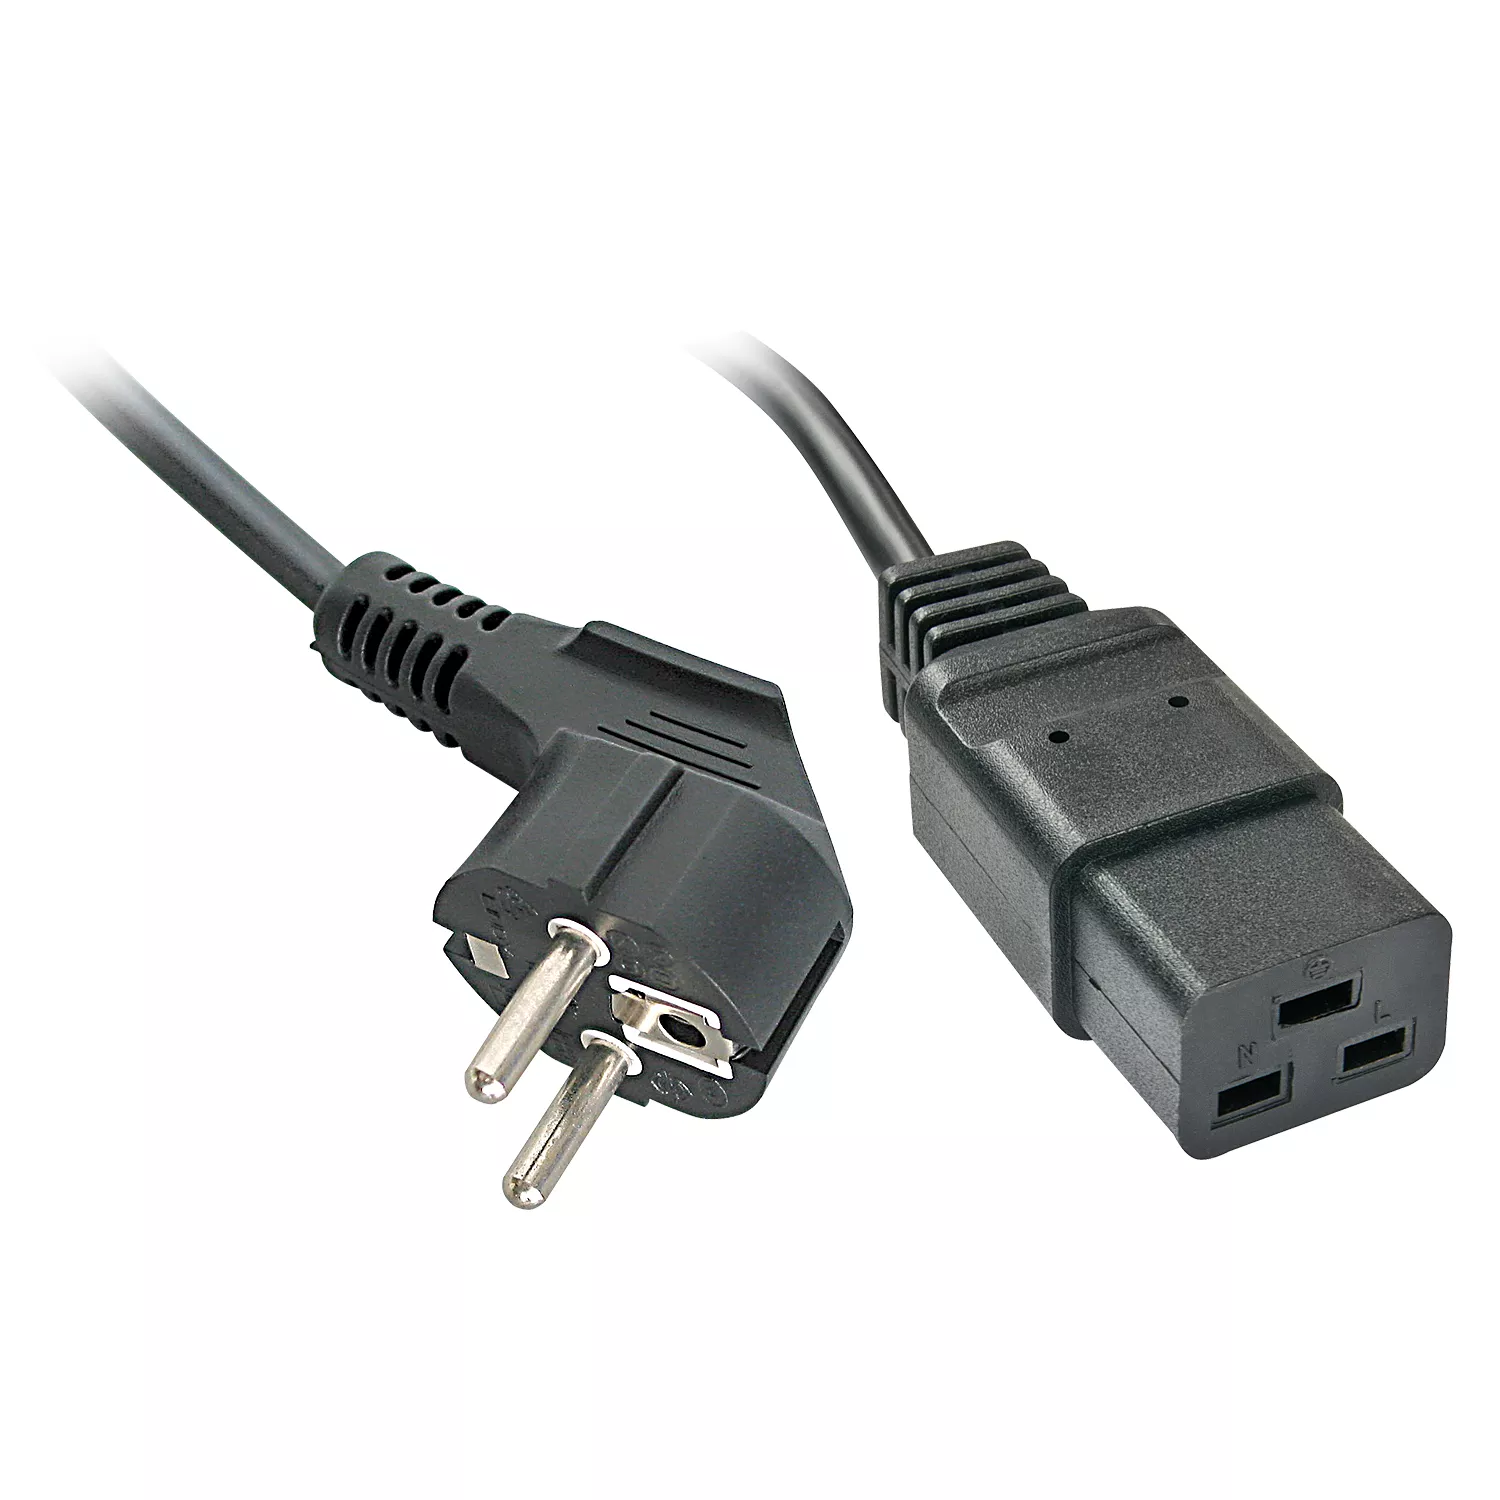 Revendeur officiel LINDY Schuko to IEC C19 Mains Cable 2m for IEC cold device